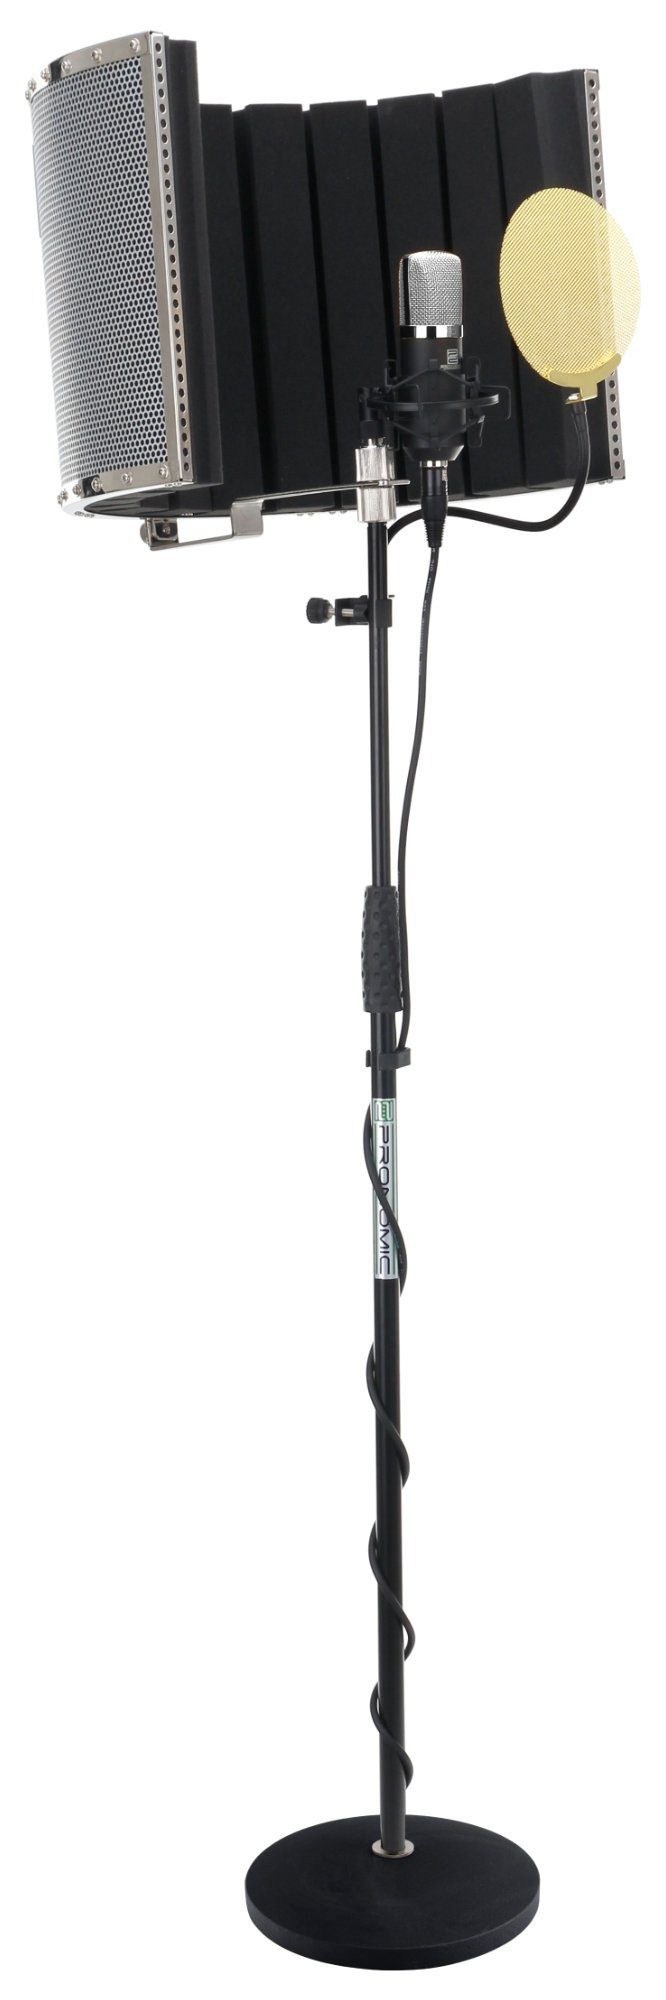 Pronomic Mikrofon CM-22 Studio Großmembranmikrofon (Komplettset Popschutz gold, 6-tlg), Inkl. Ständer, Micscreen, Kabel & Transportkoffer